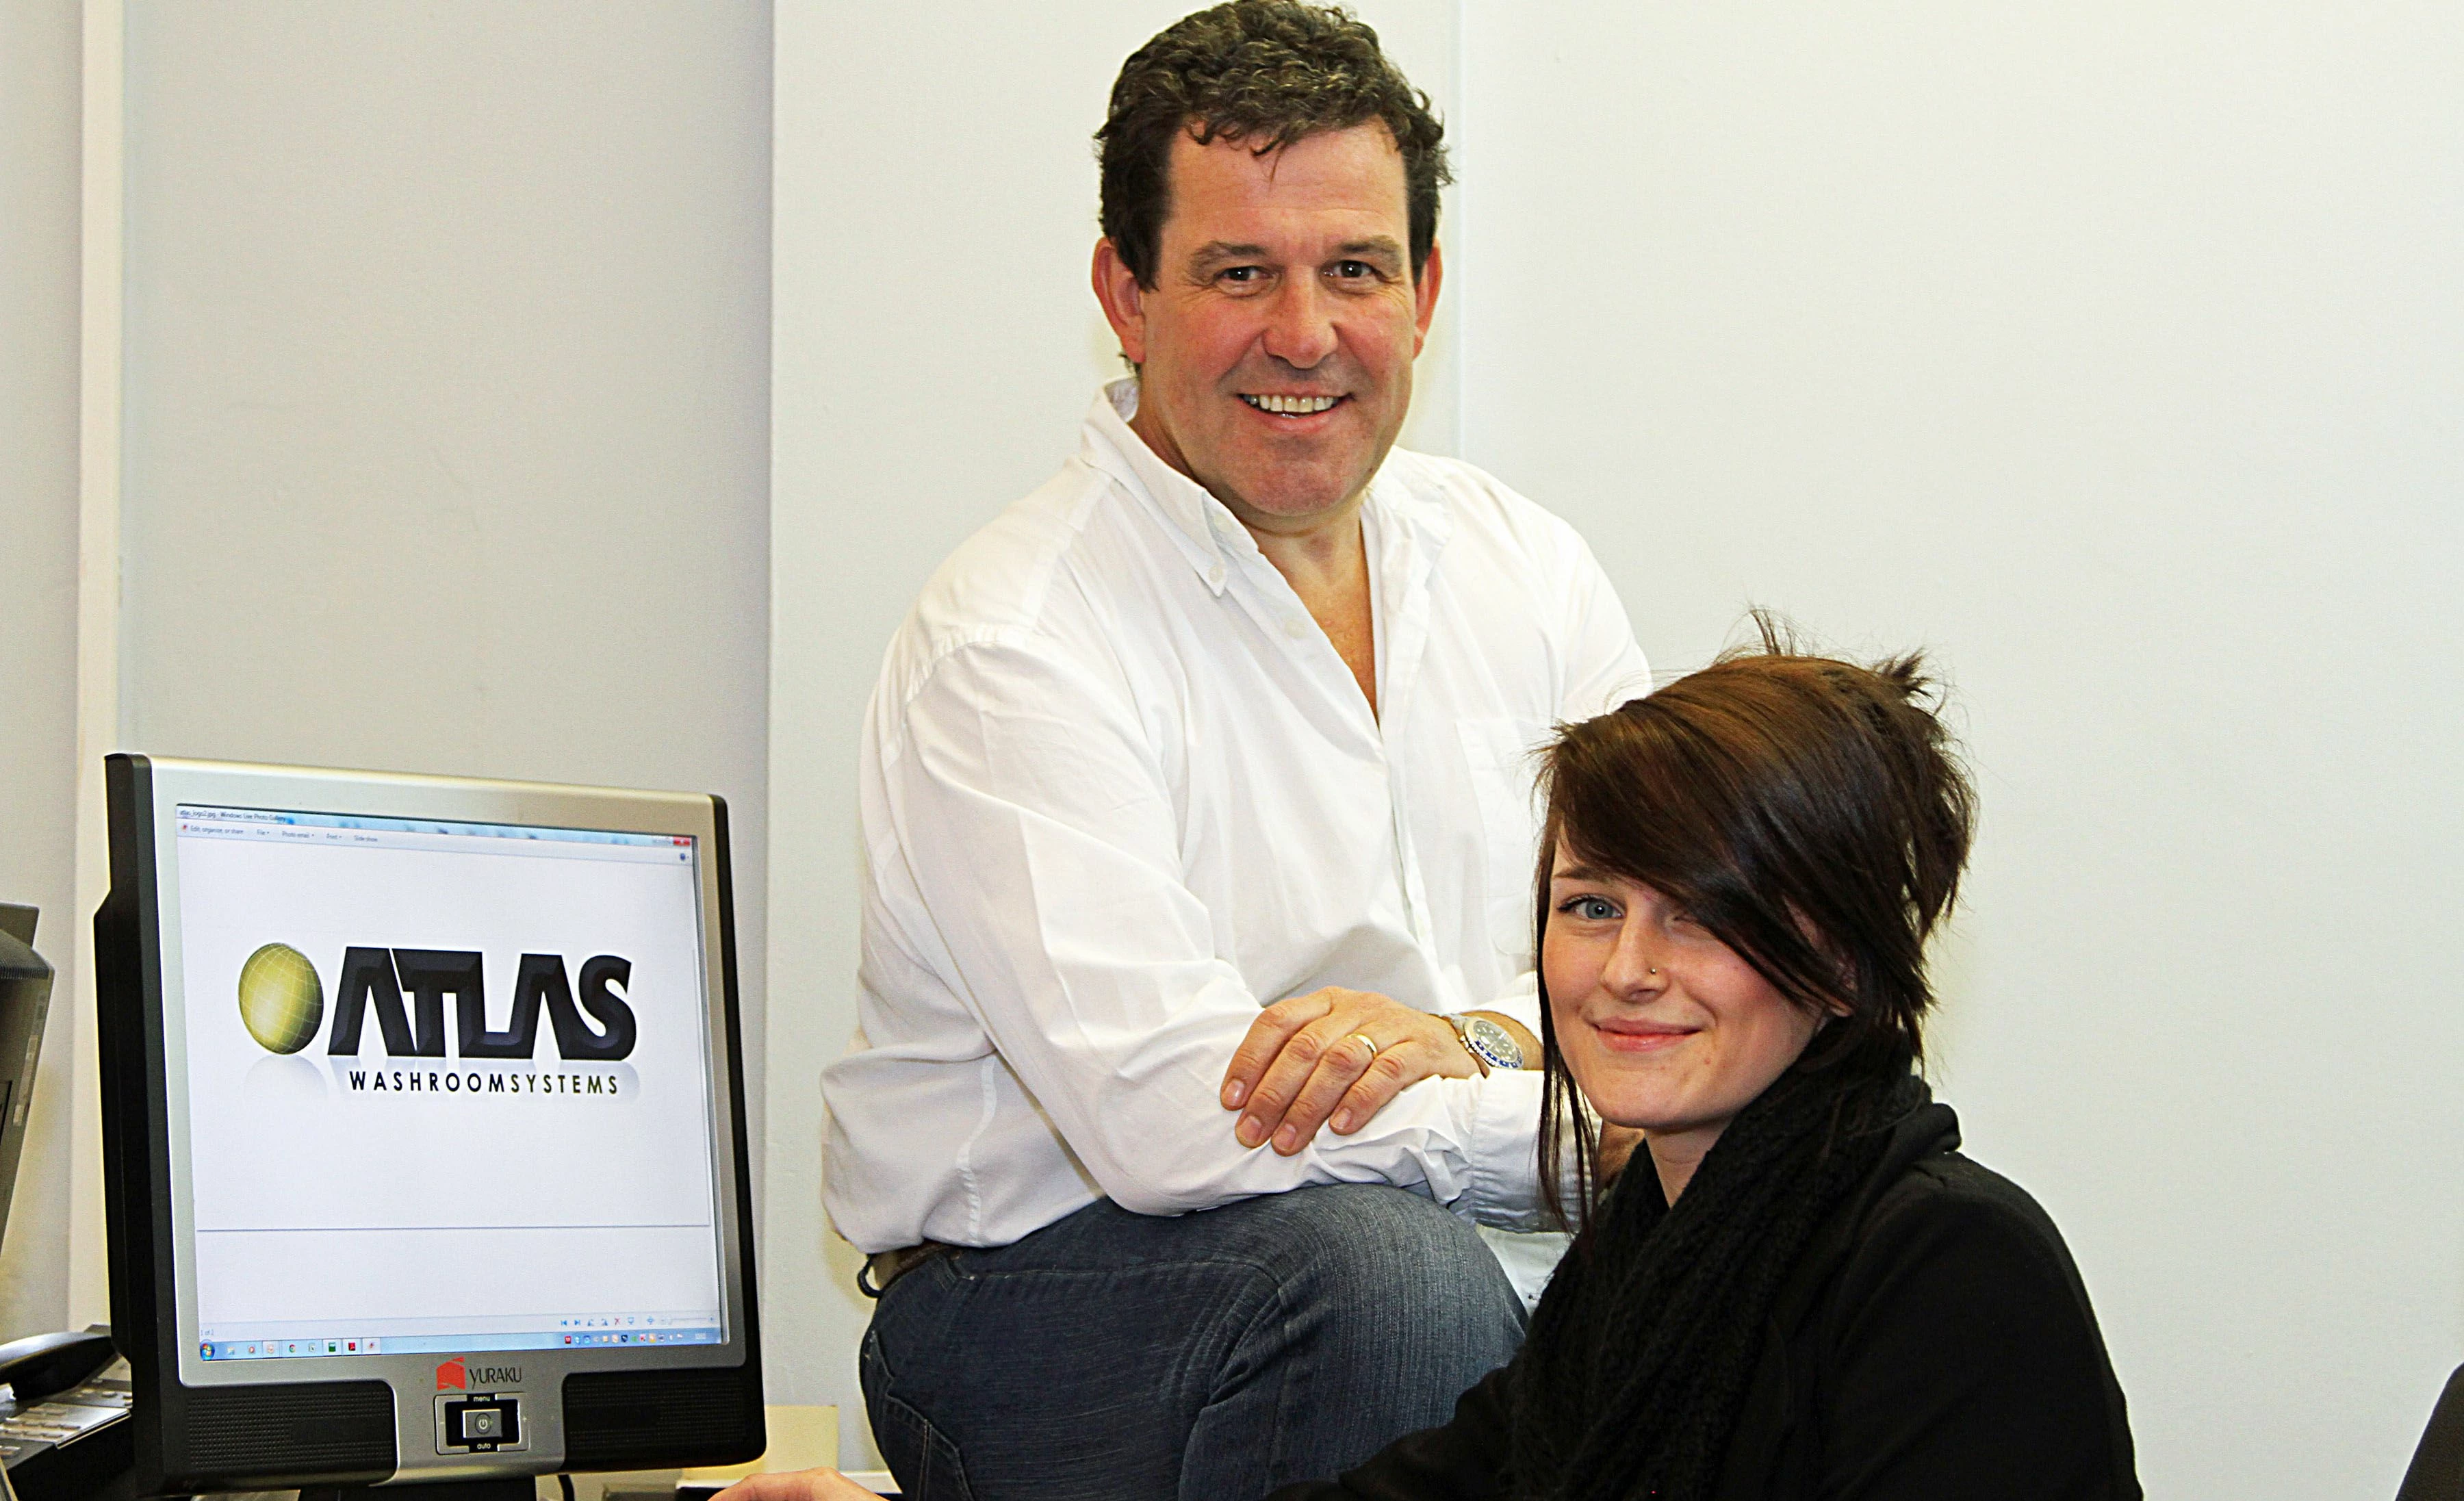 MD Gerald Shervington and Emma Greaves at Atlas Washroom Systems.